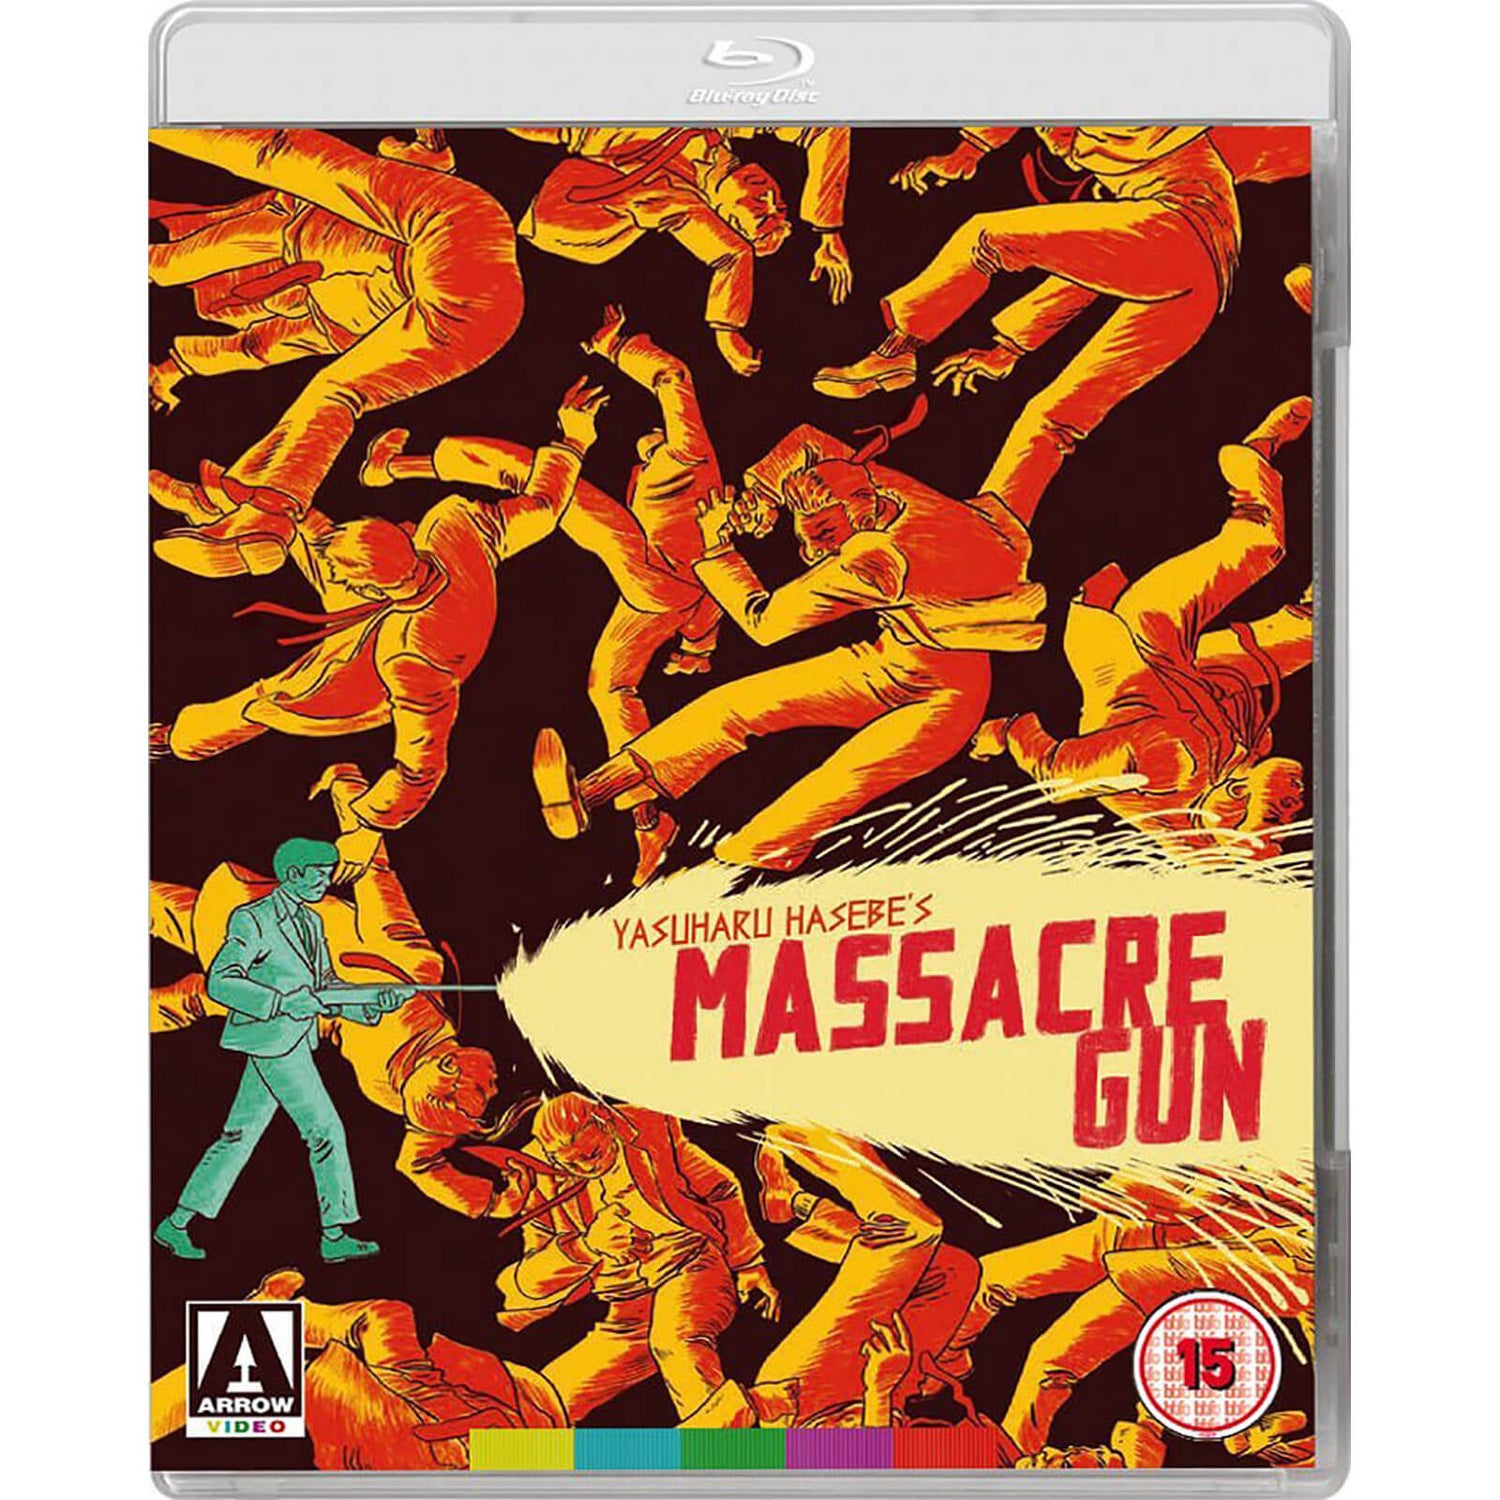 Massacre Gun Blu-ray